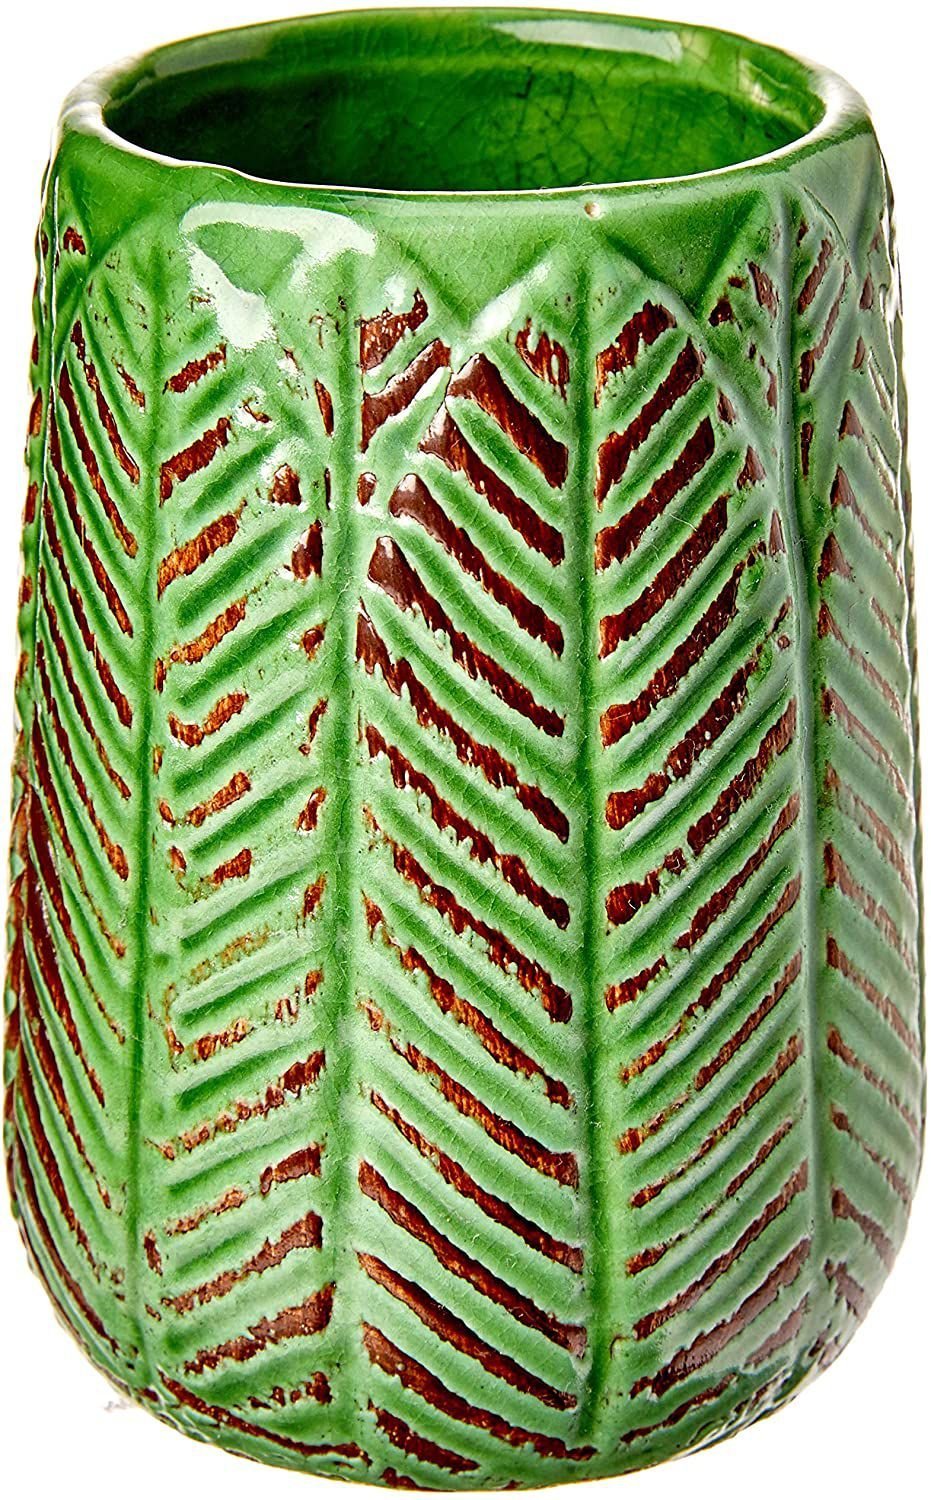 Crispin Vaso Decorativo em Cerâmica Verde Home & Co Luxo - 1